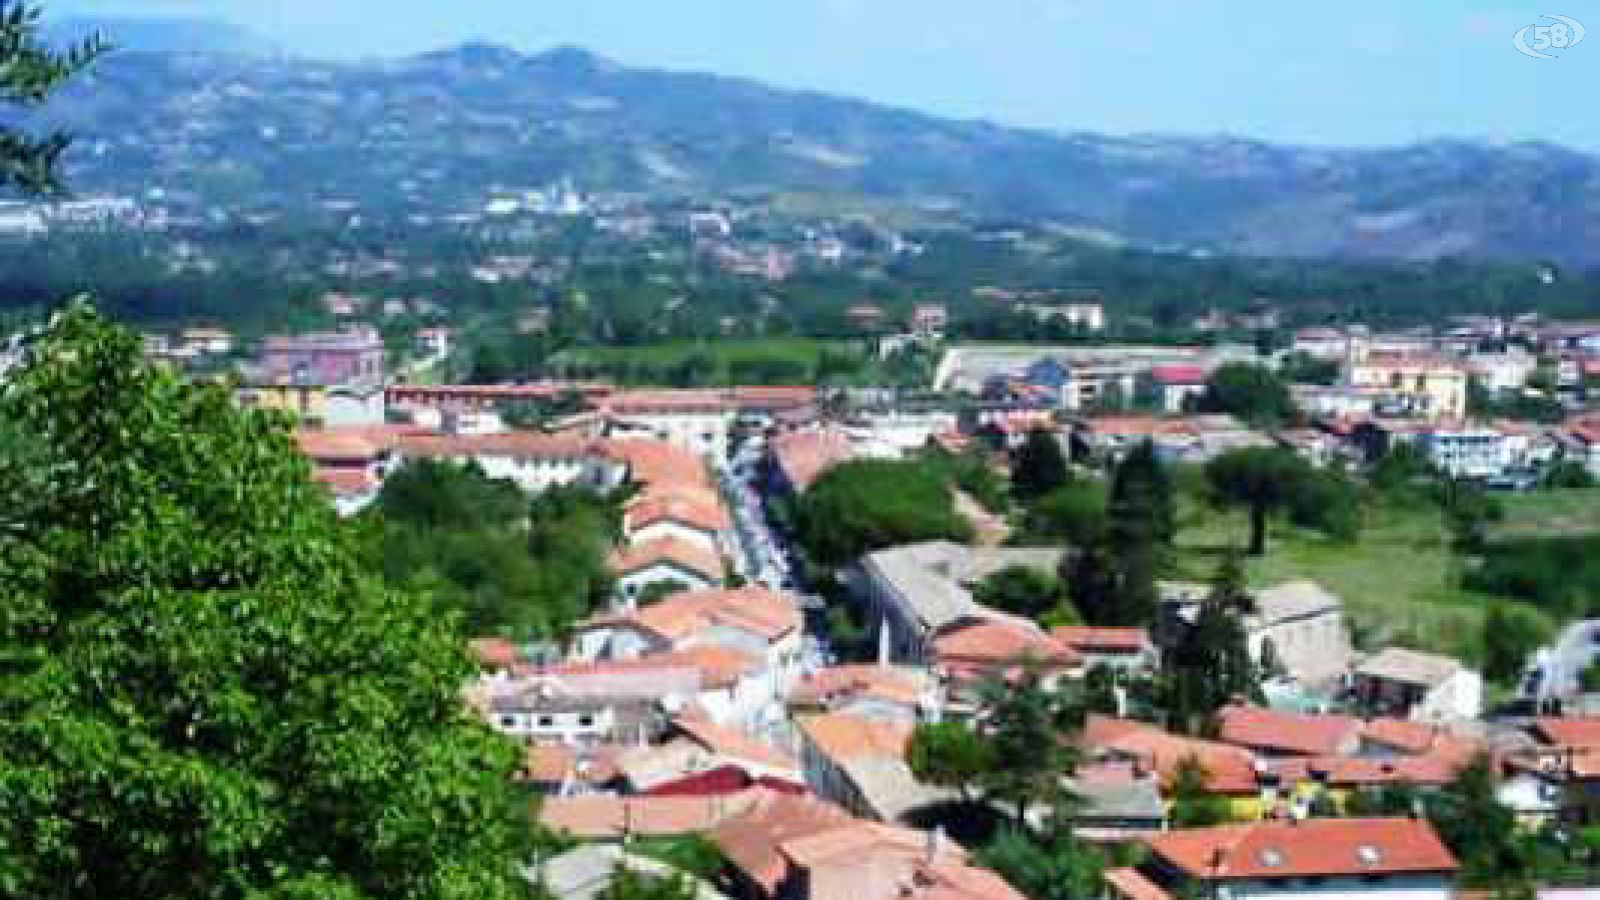 San Martino Valle Caudina